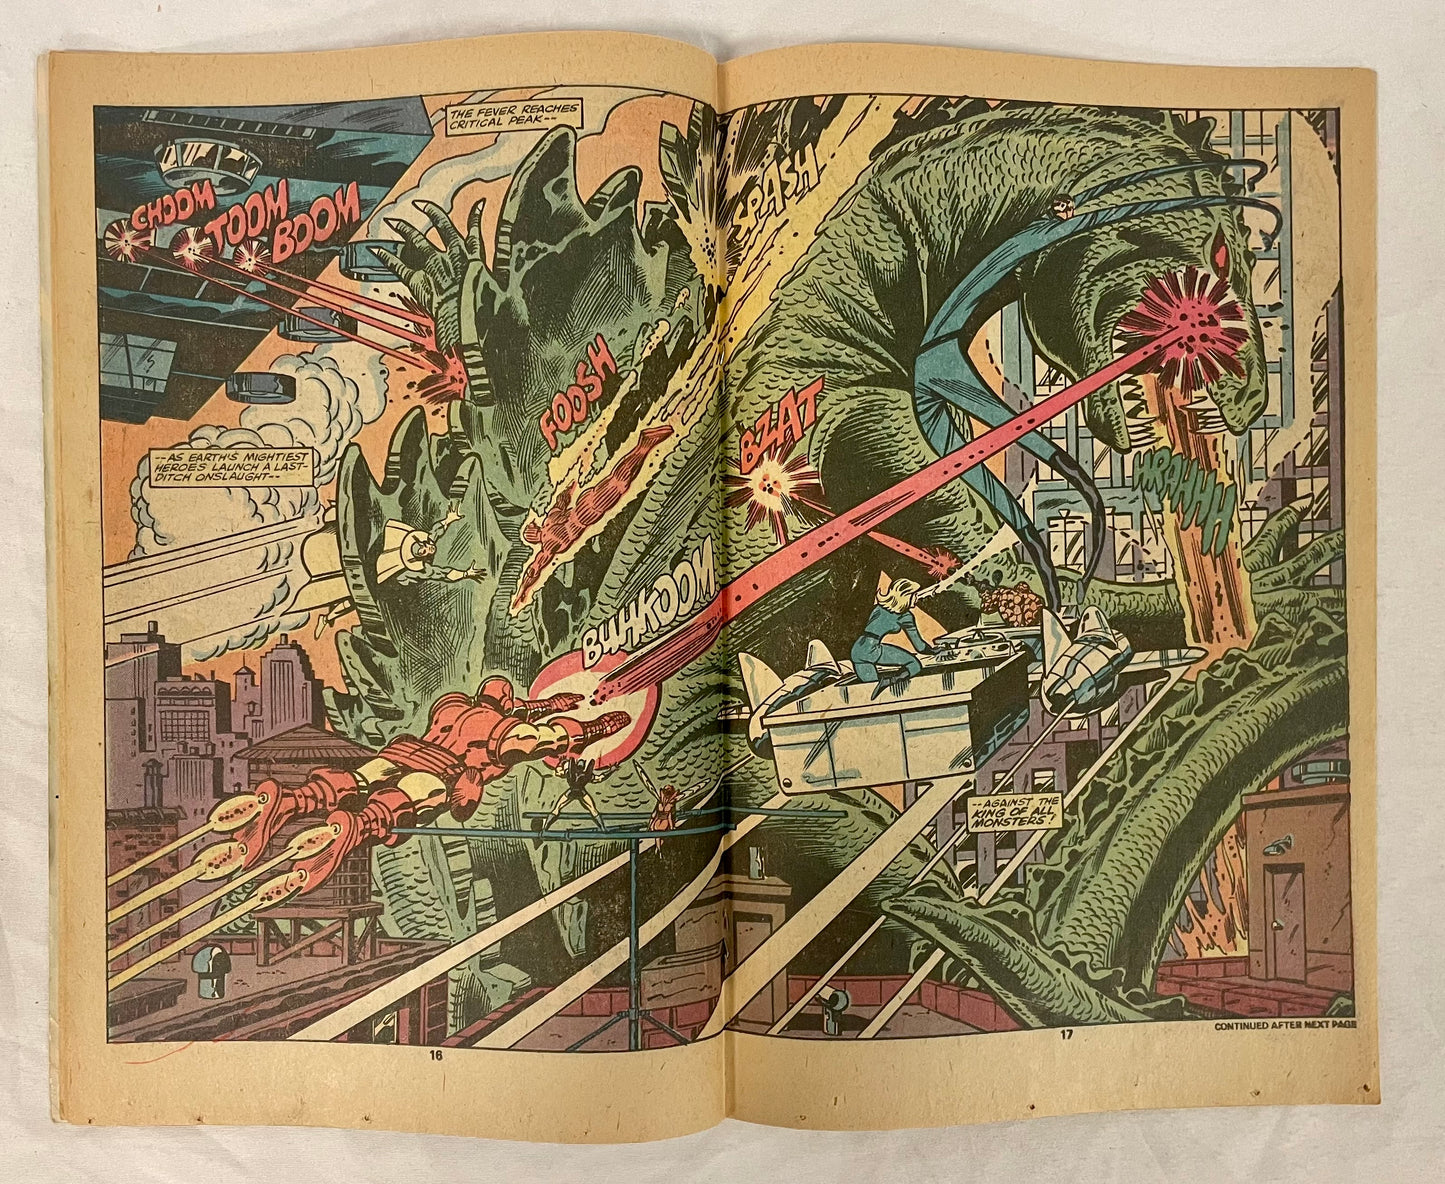 Marvel Comics Godzilla #24